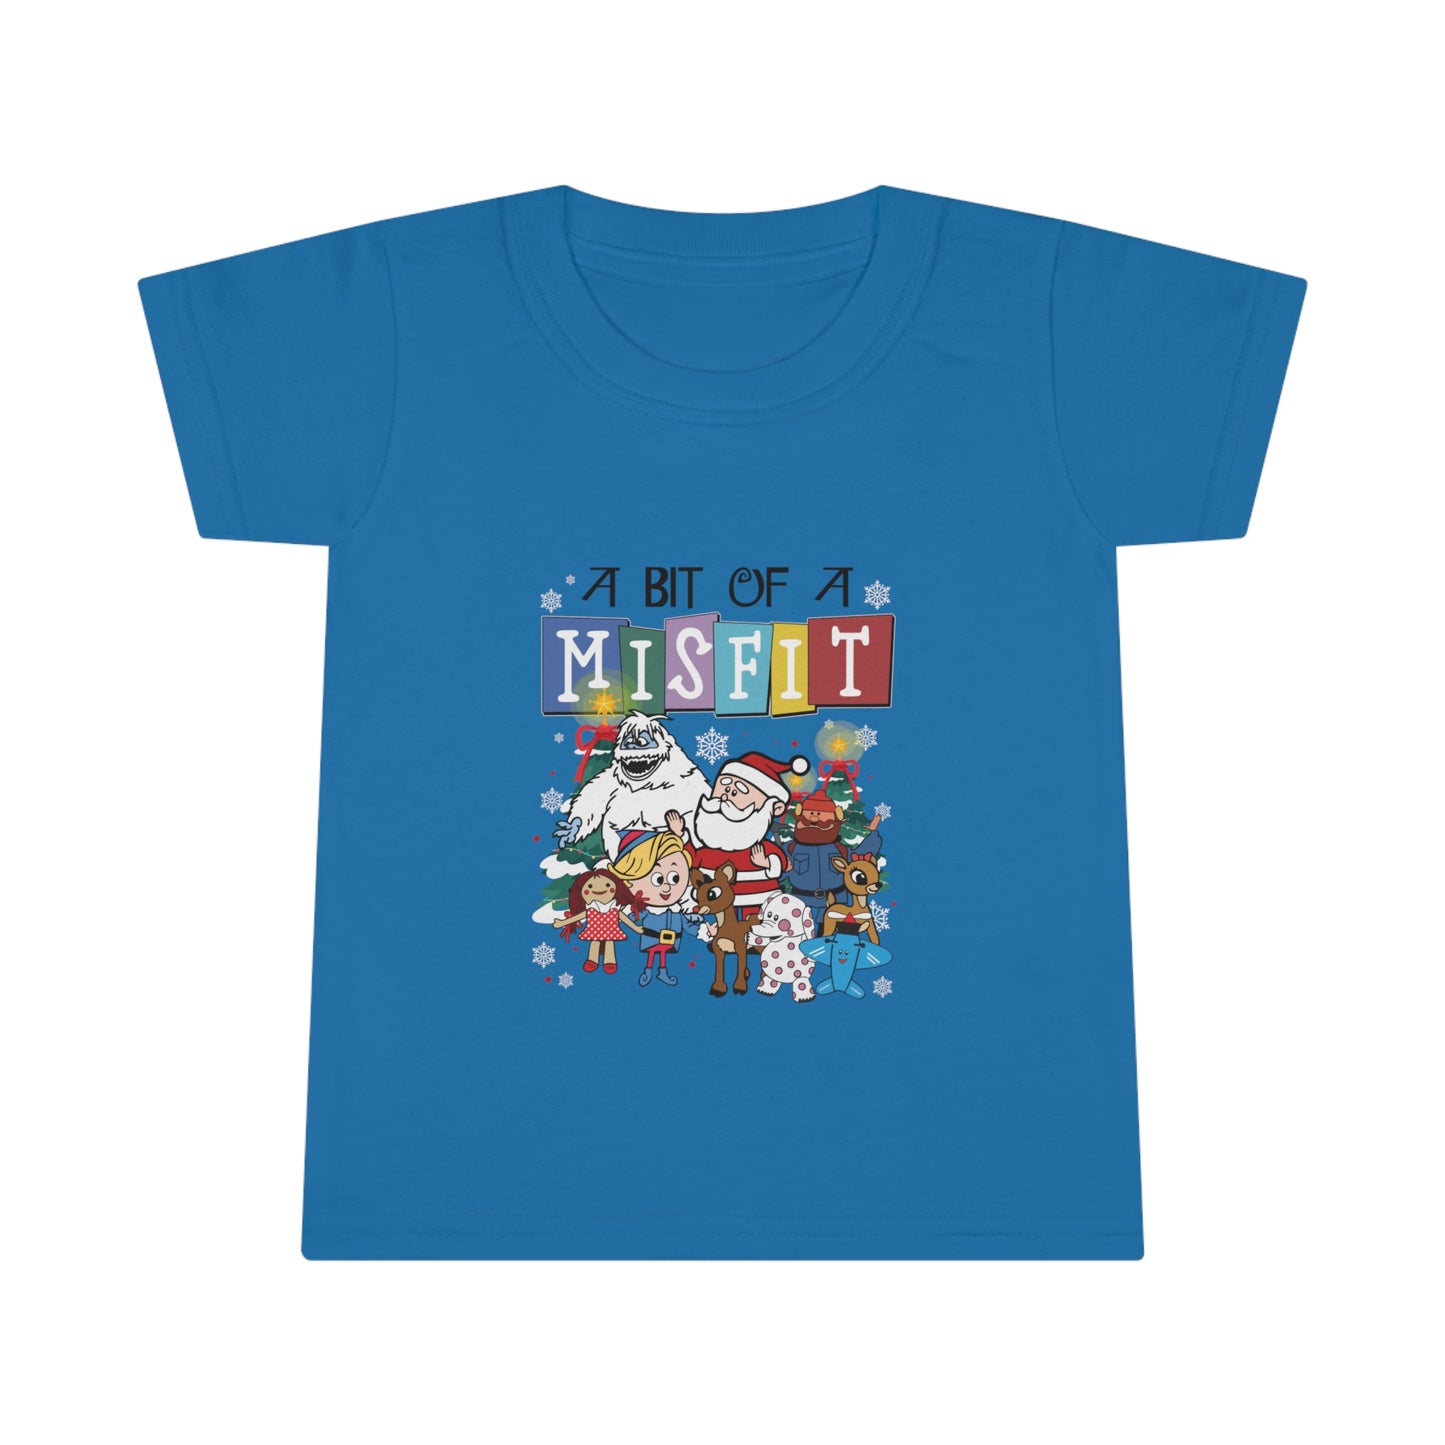 Misfit toy shirt, misfits toddler t-shirts, bumble shirt, toddler shirt, misfit island, Rudolph reindeer